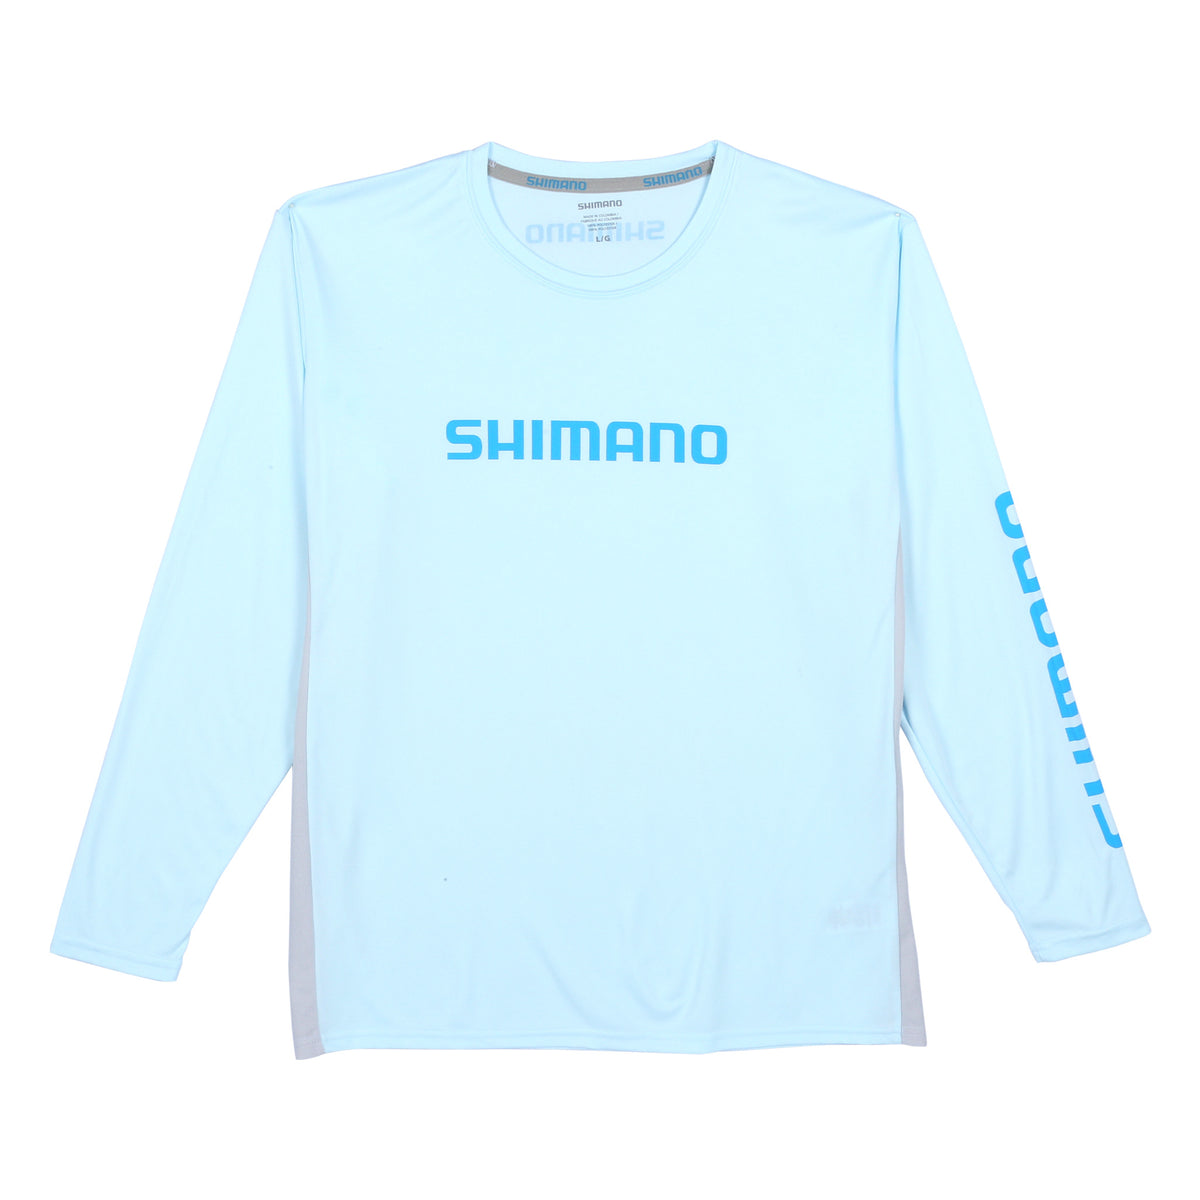 Shimano Fishing Shimano Long Sleeve Tech Tee - White, SM [ATEEVAPLSSWH]